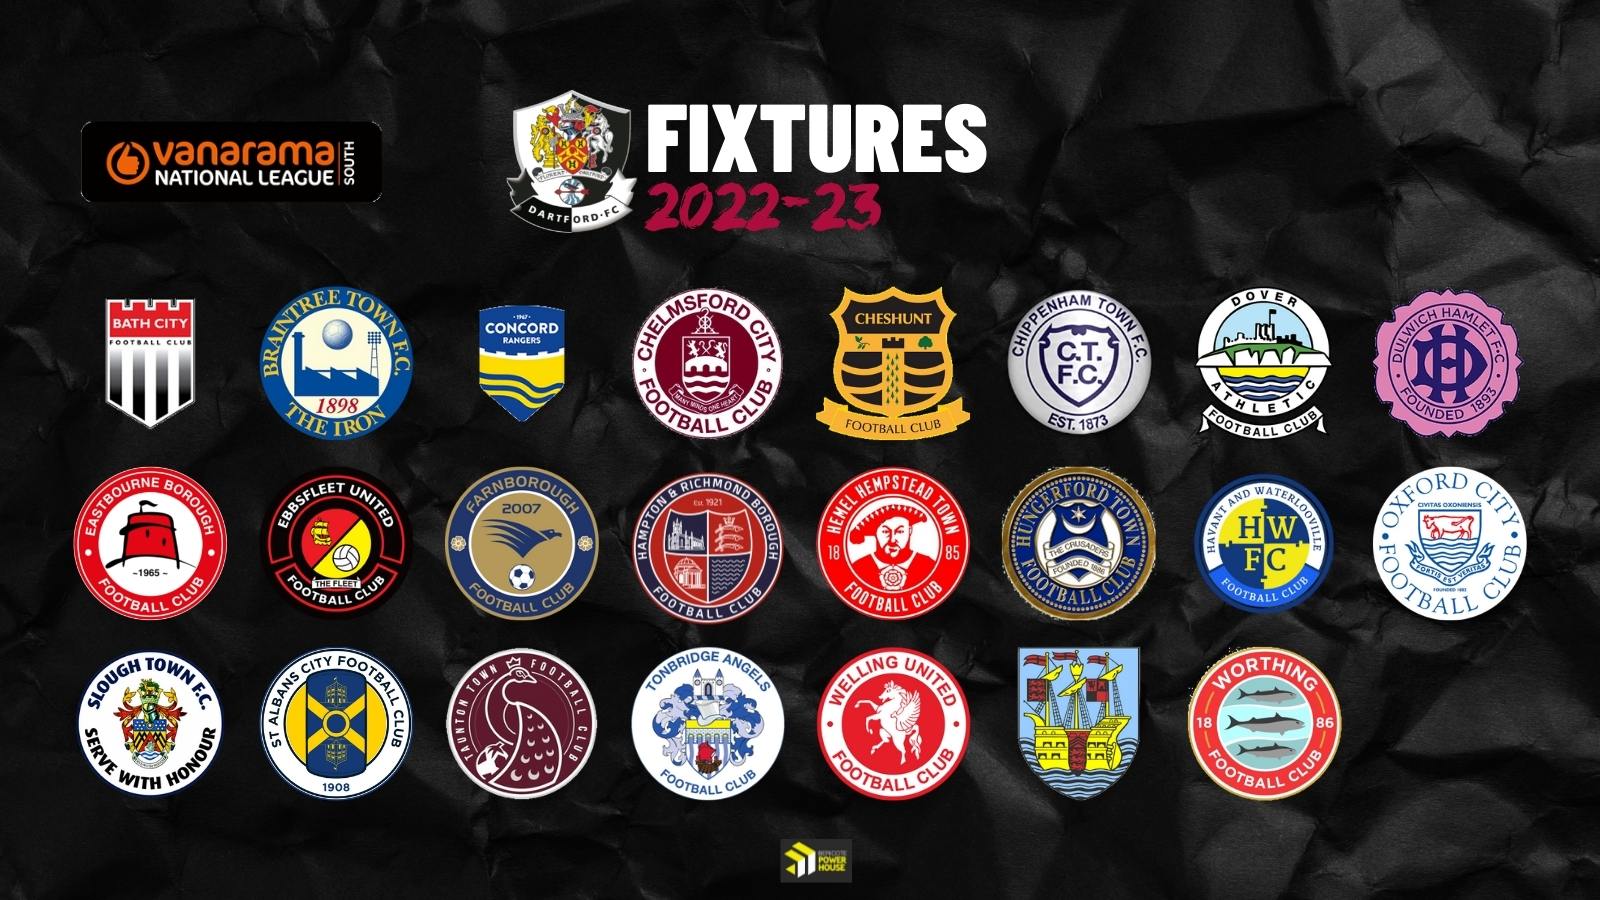 2022/23 season fixtures